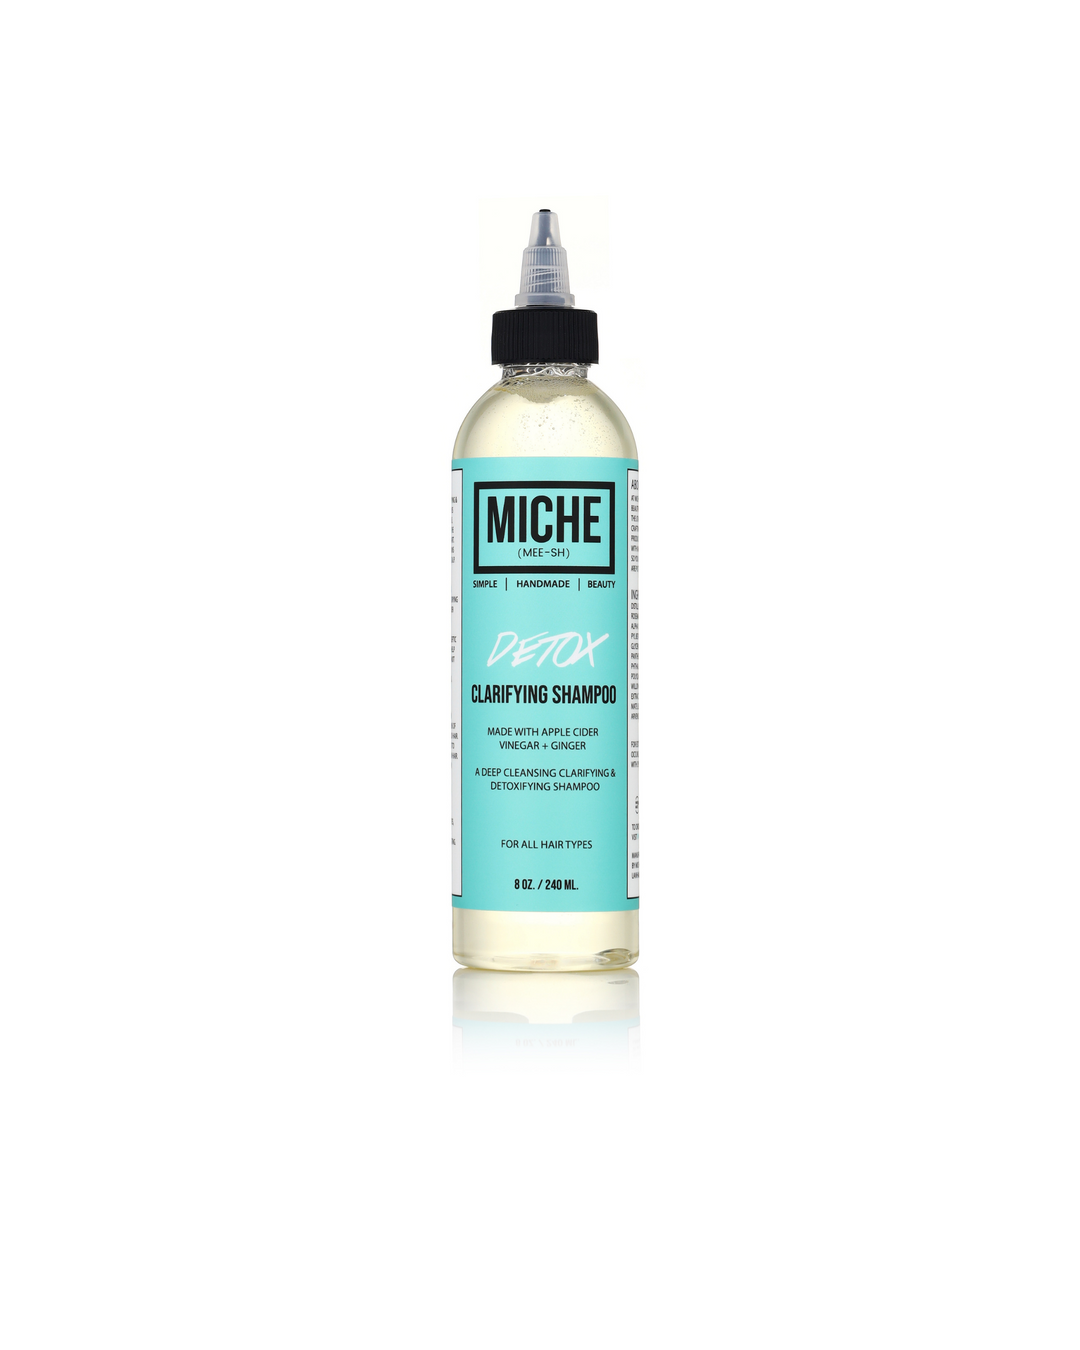 MICHE DETOX Clarifying & Detoxifying Shampoo